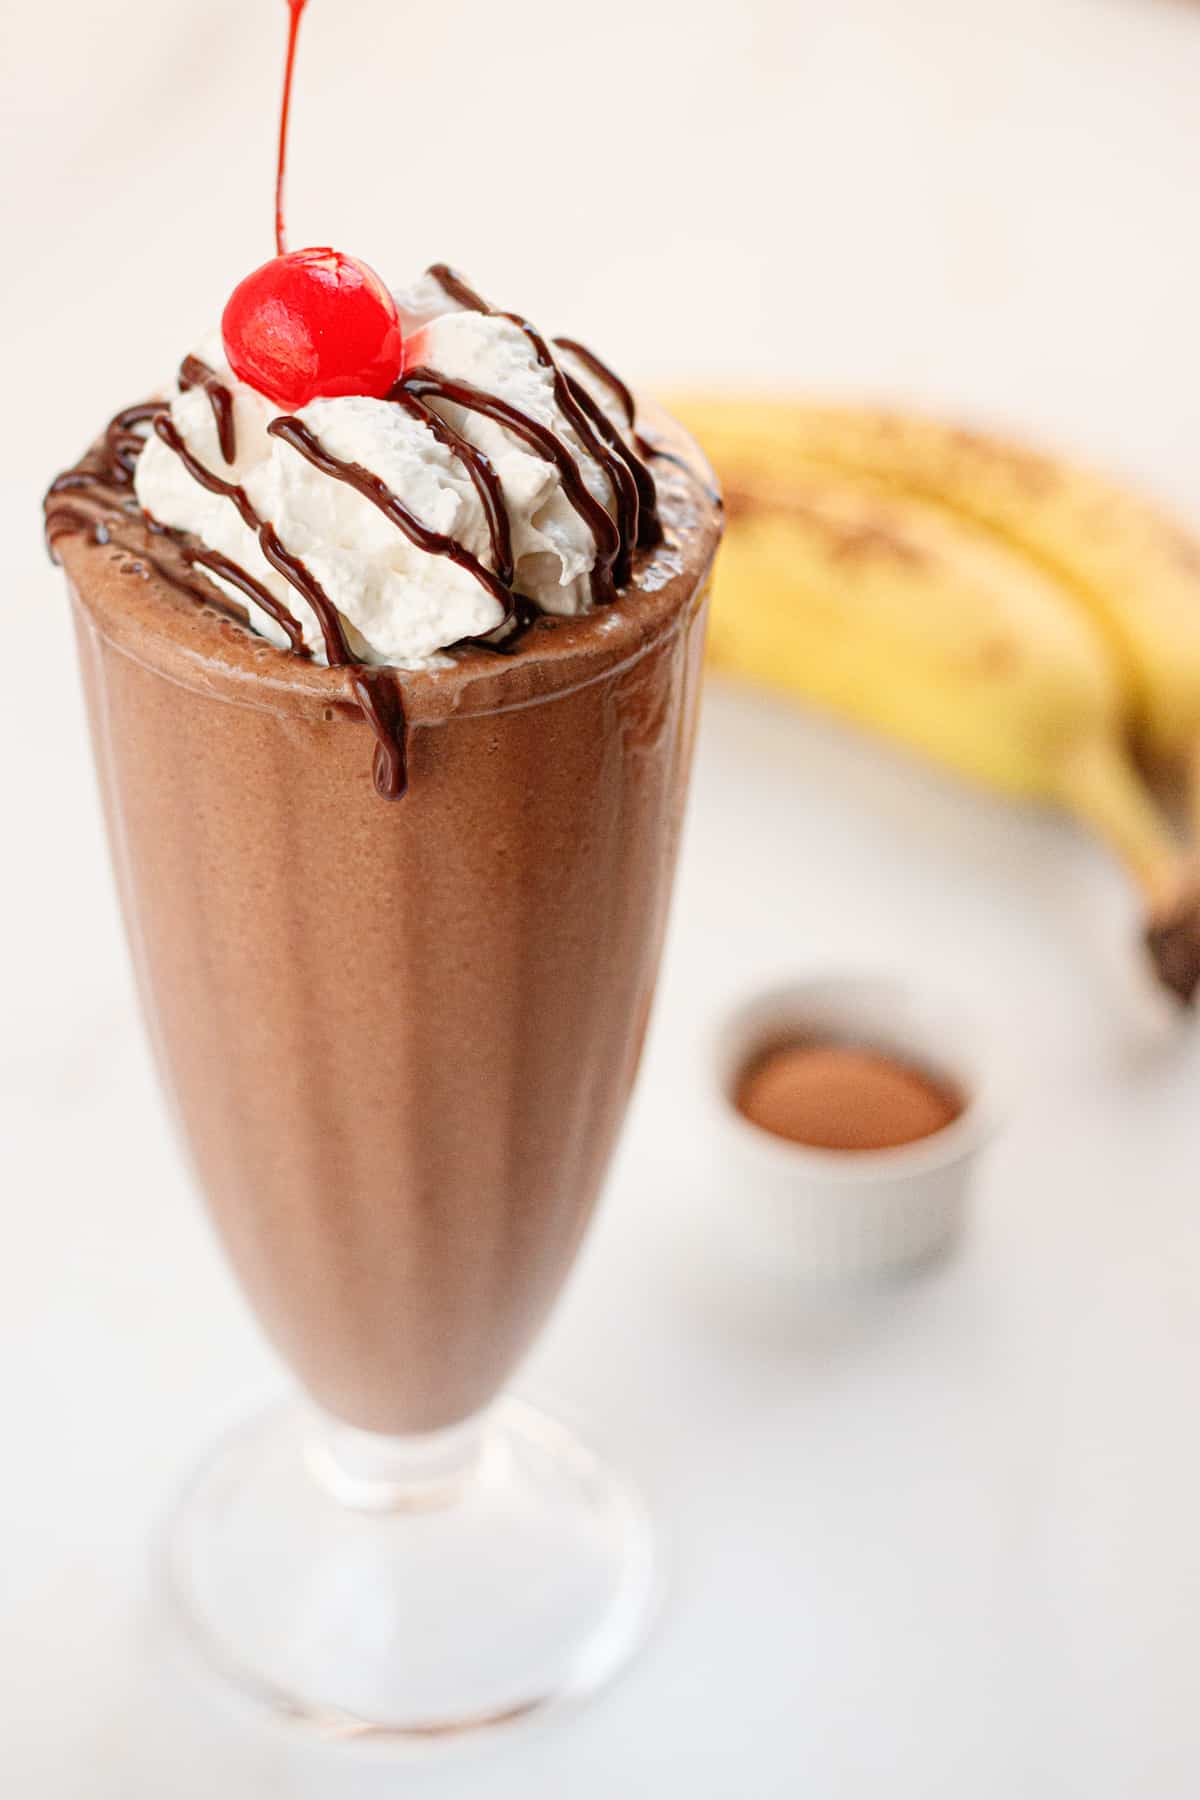 Chocolate banana milkshake with vegan whipped cream and chocolate, topped with a cherry.